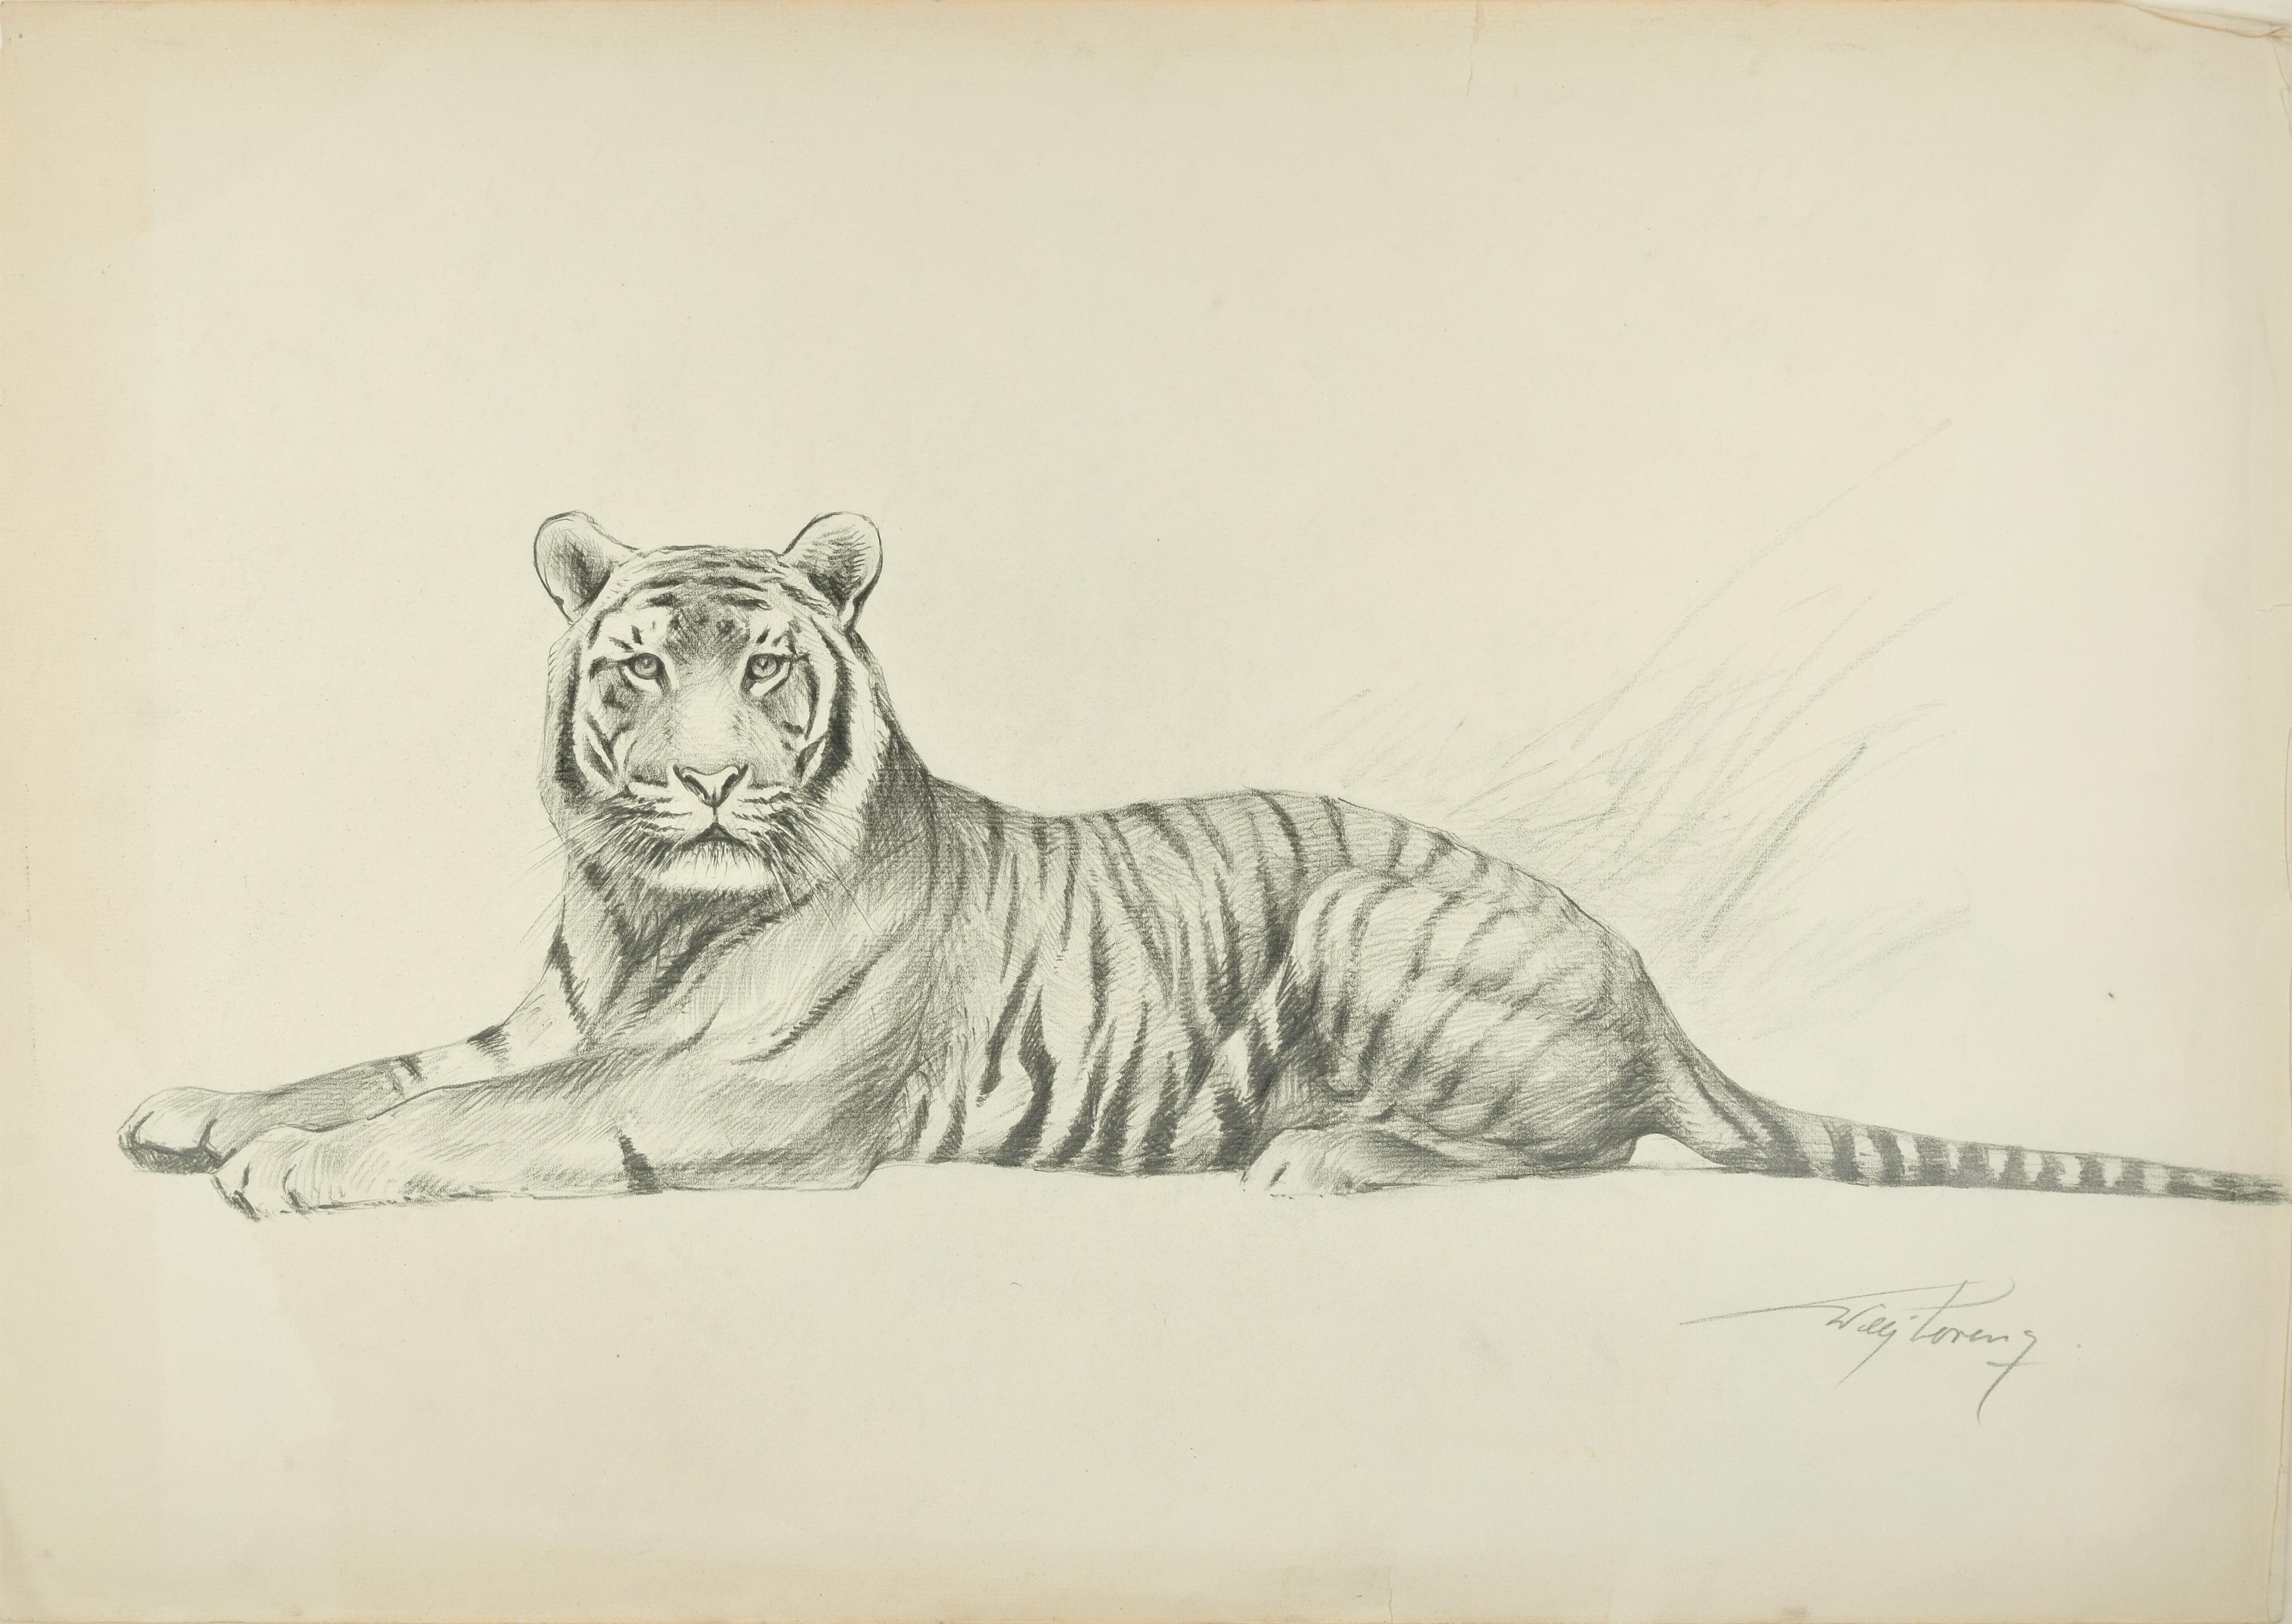 Figurative Art Wilhelm Lorenz - Tigre - Dessin original au crayon par Willy Lorenz - Milieu du 20e siècle